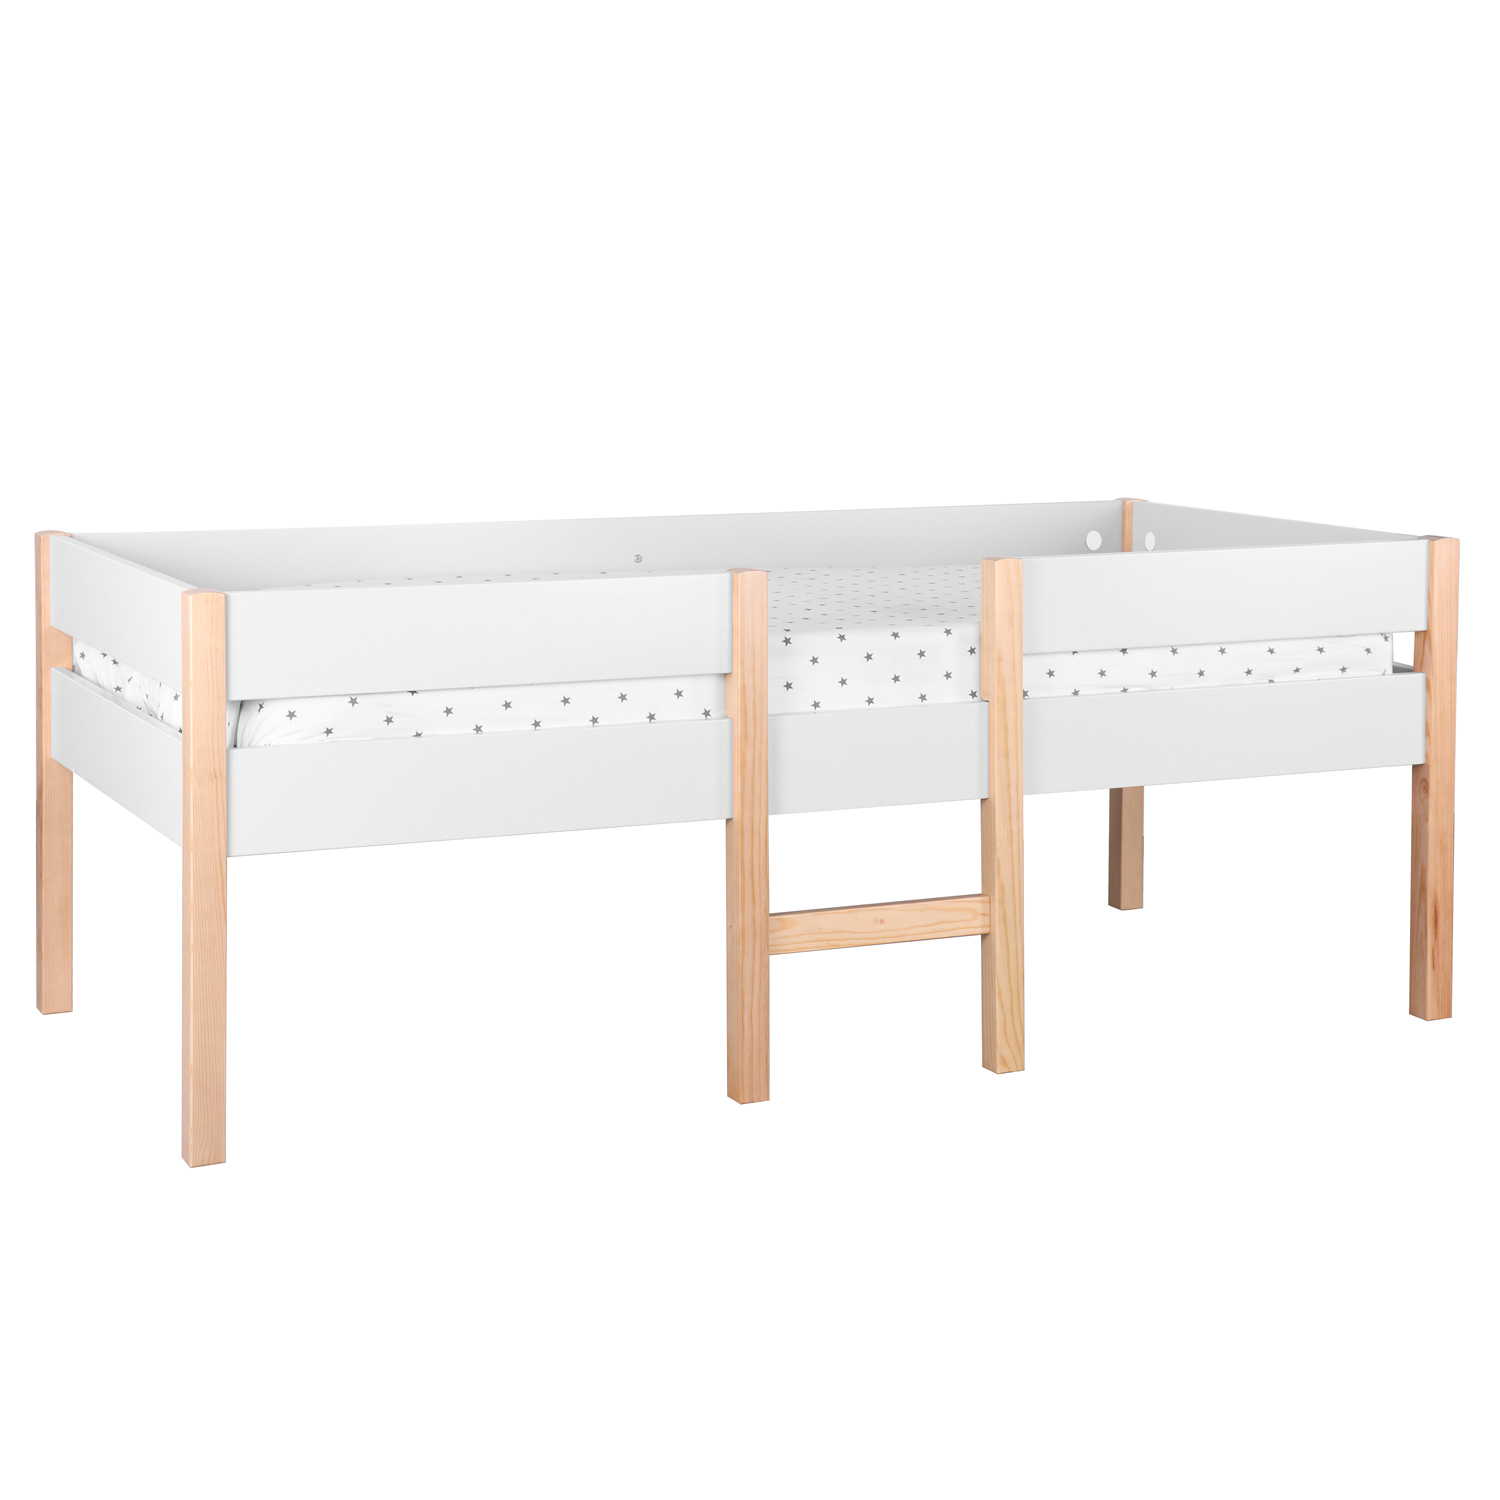 Children´s Bed Bunk Bed Kids Bed Mid Sleeper 90x200 White Wood Drawer